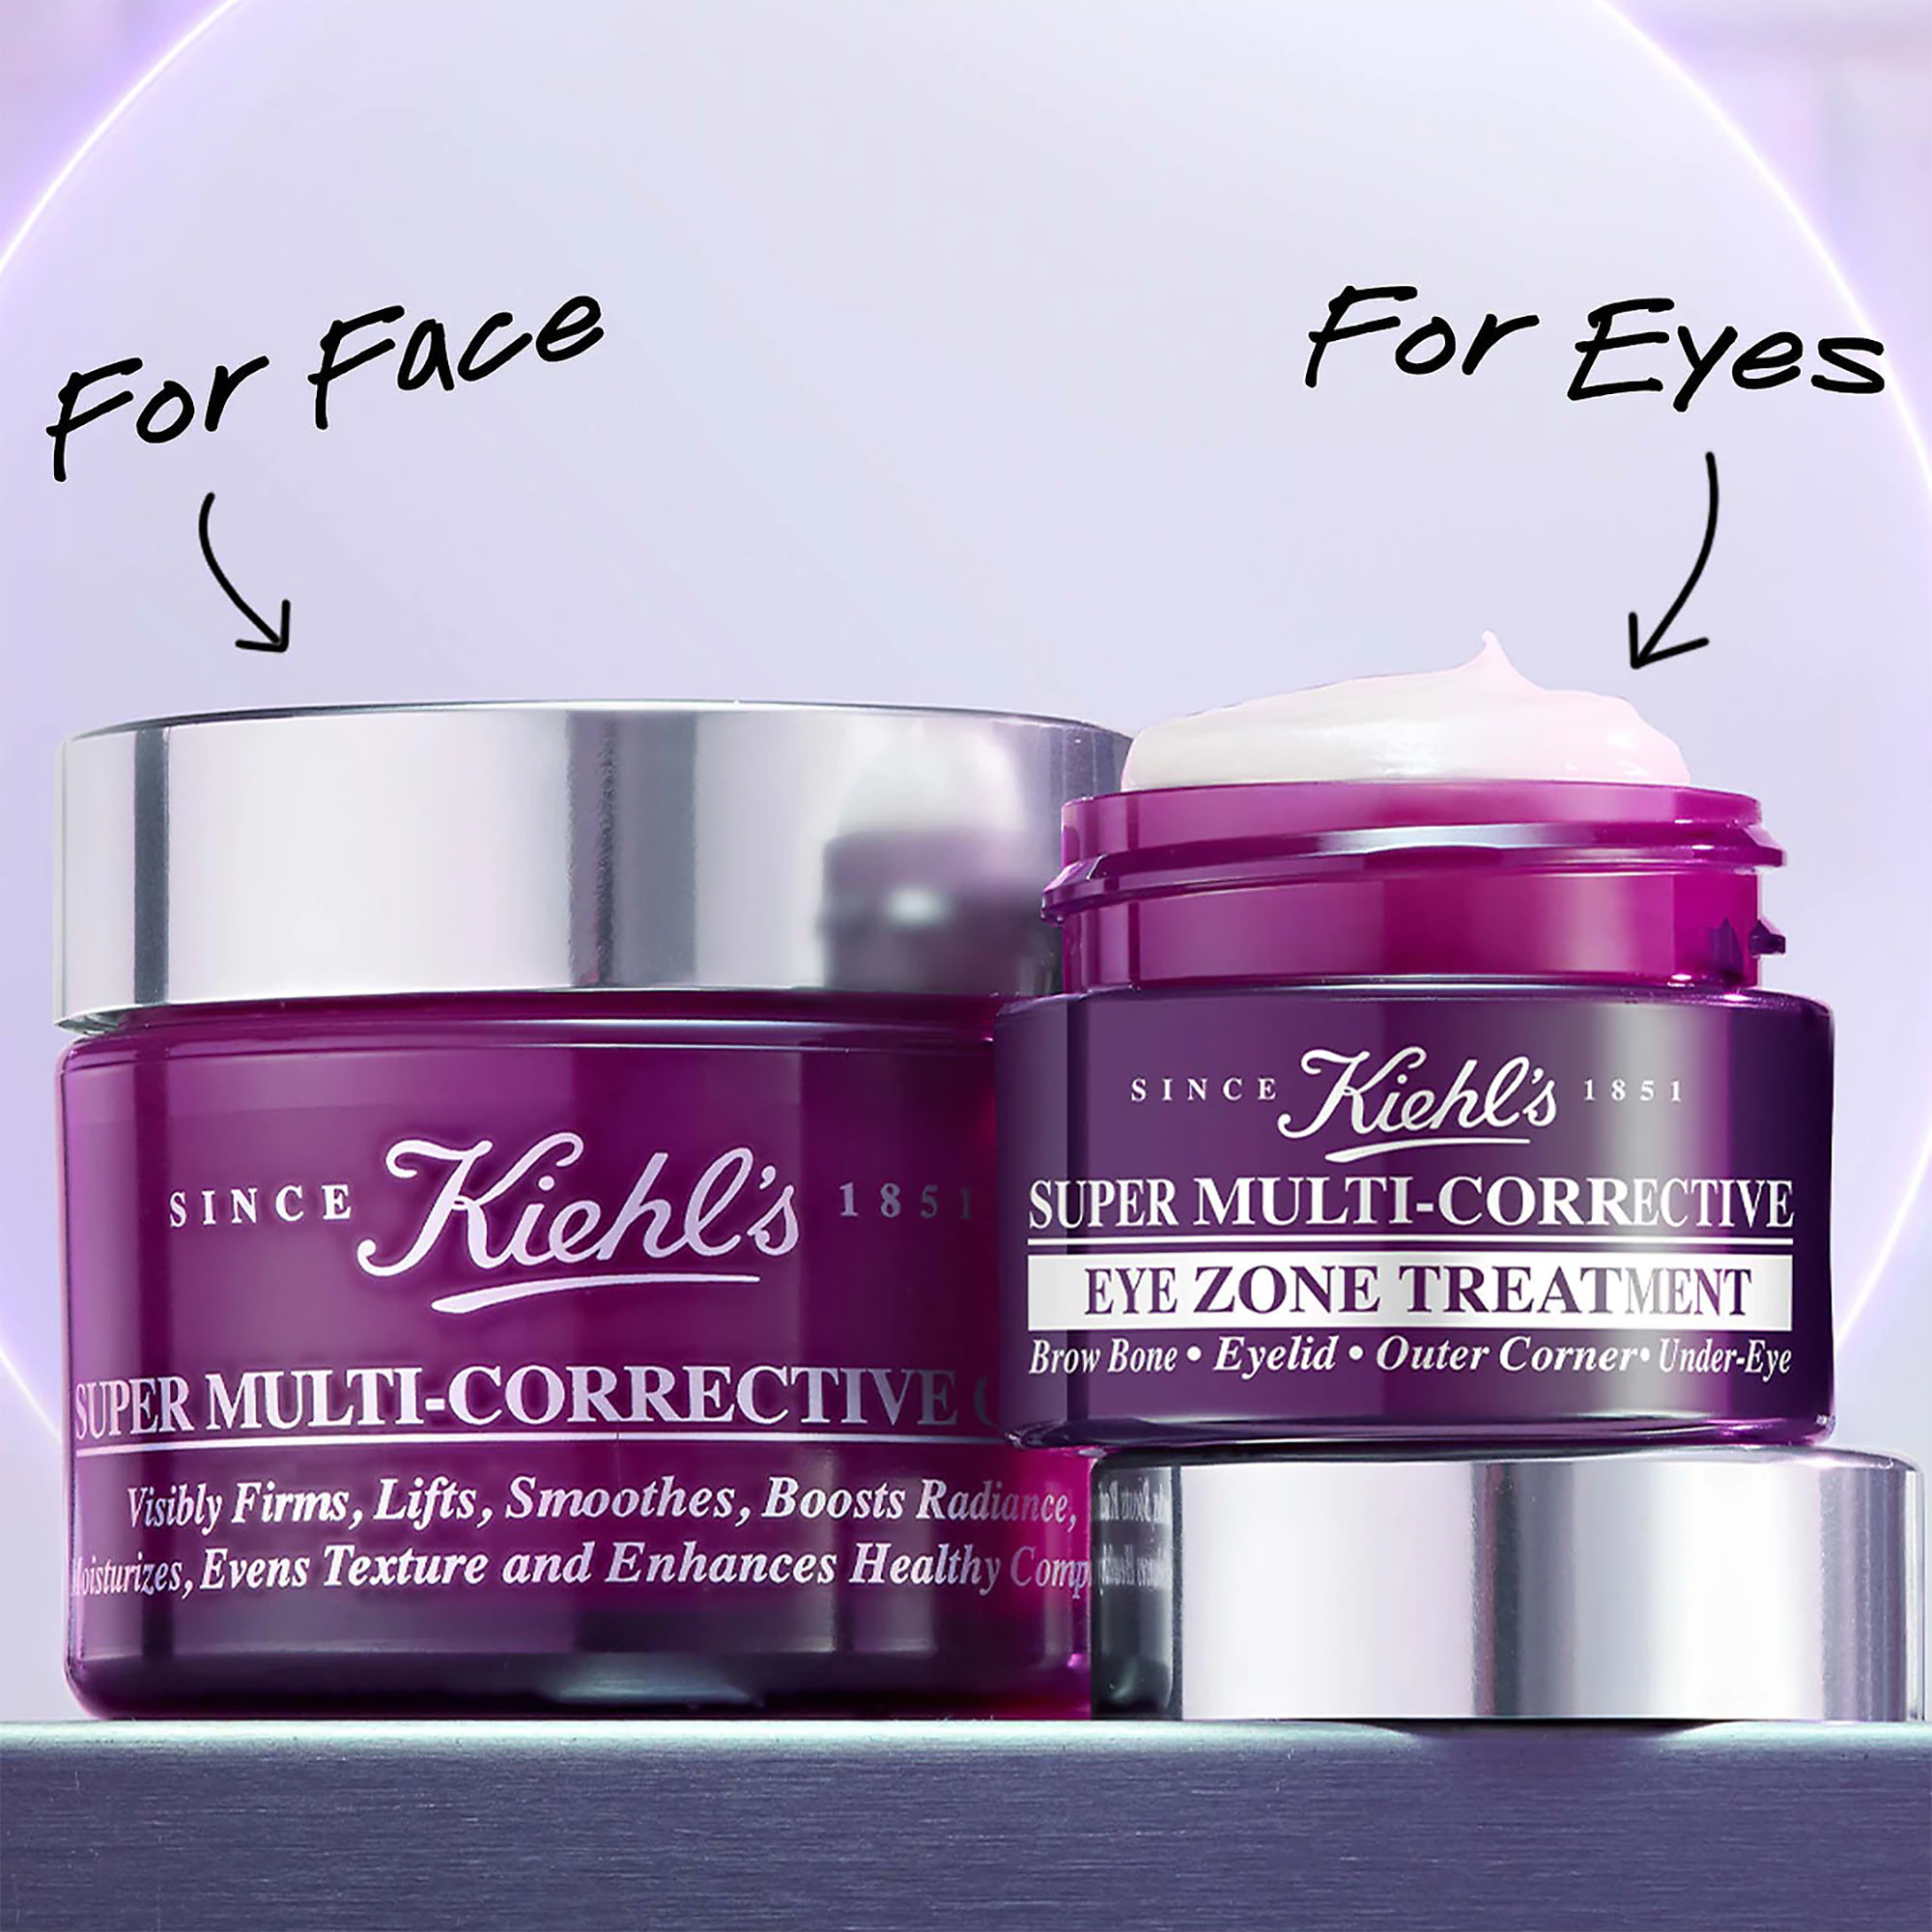 Talika Skin and Eye Care Beauty Products